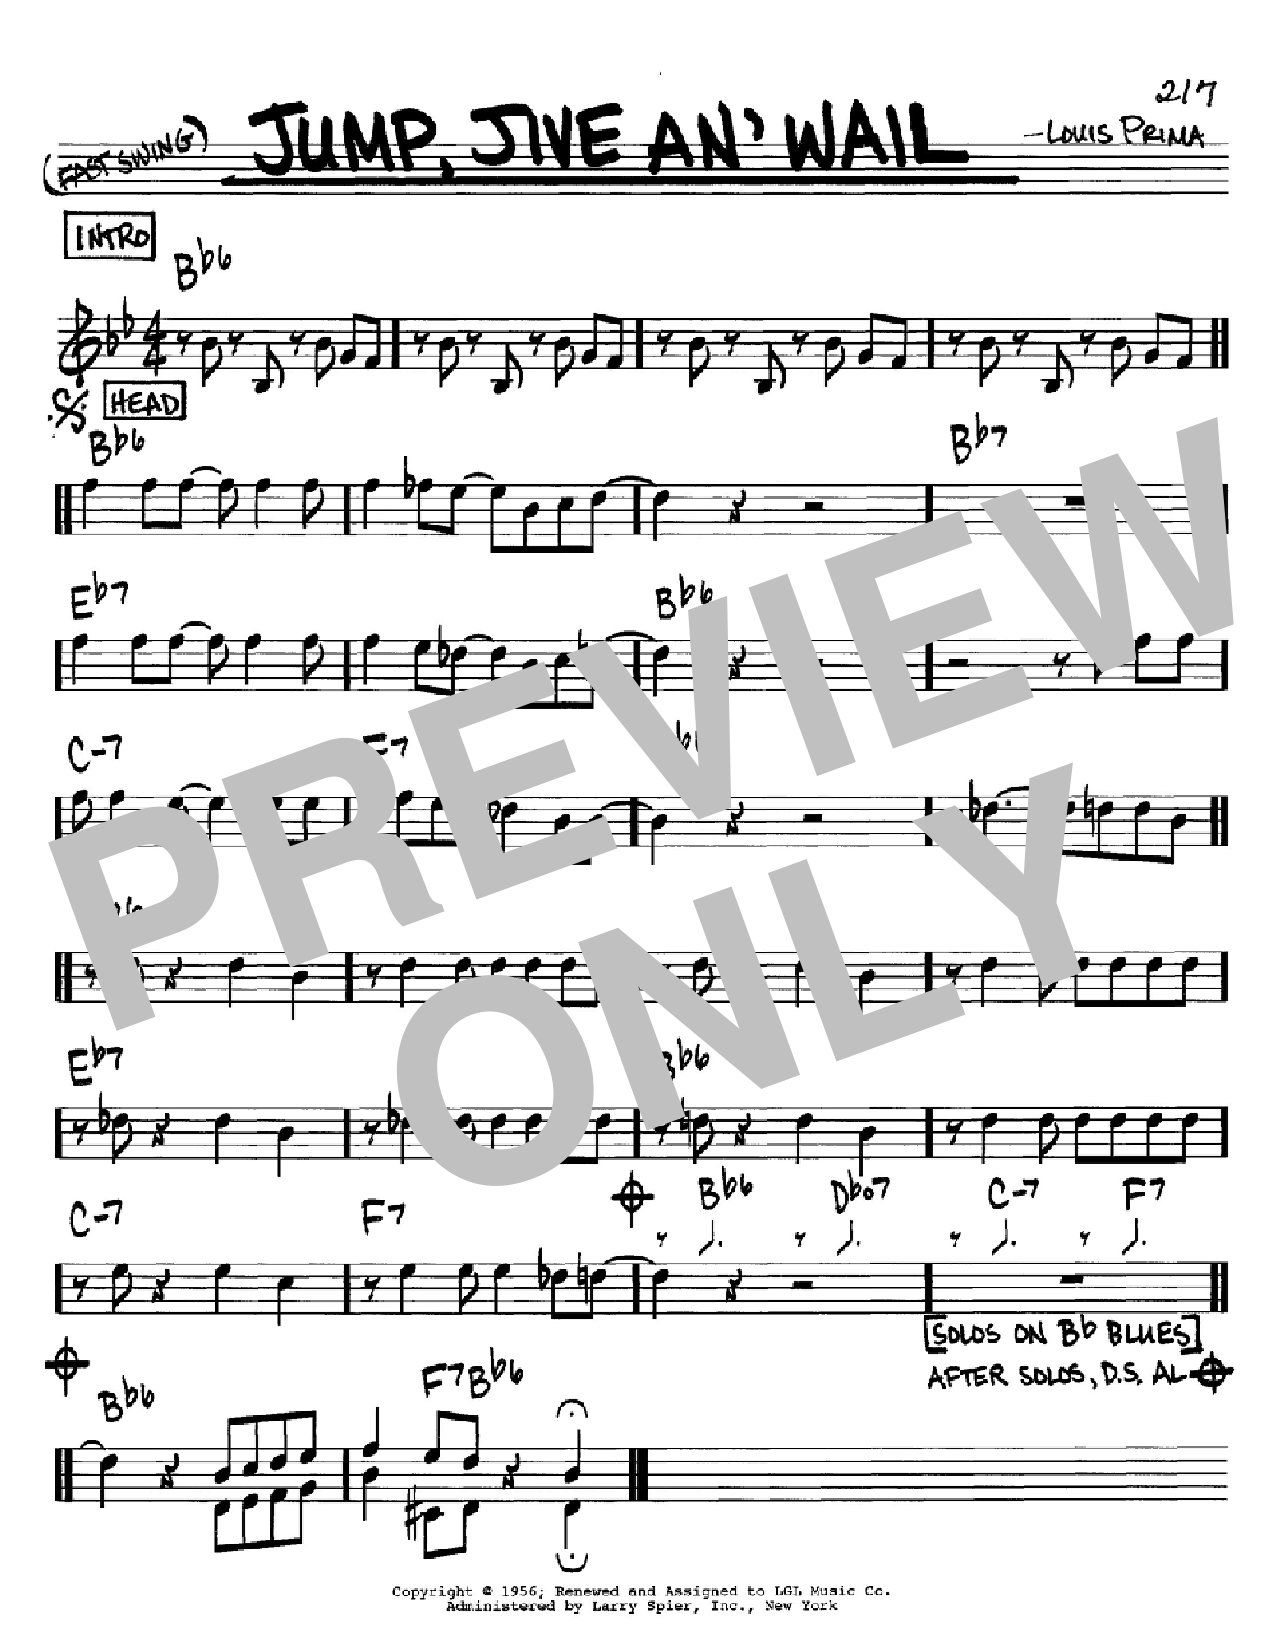 Louis Prima Jump, Jive An' Wail Sheet Music Notes & Chords for Melody Line, Lyrics & Chords - Download or Print PDF